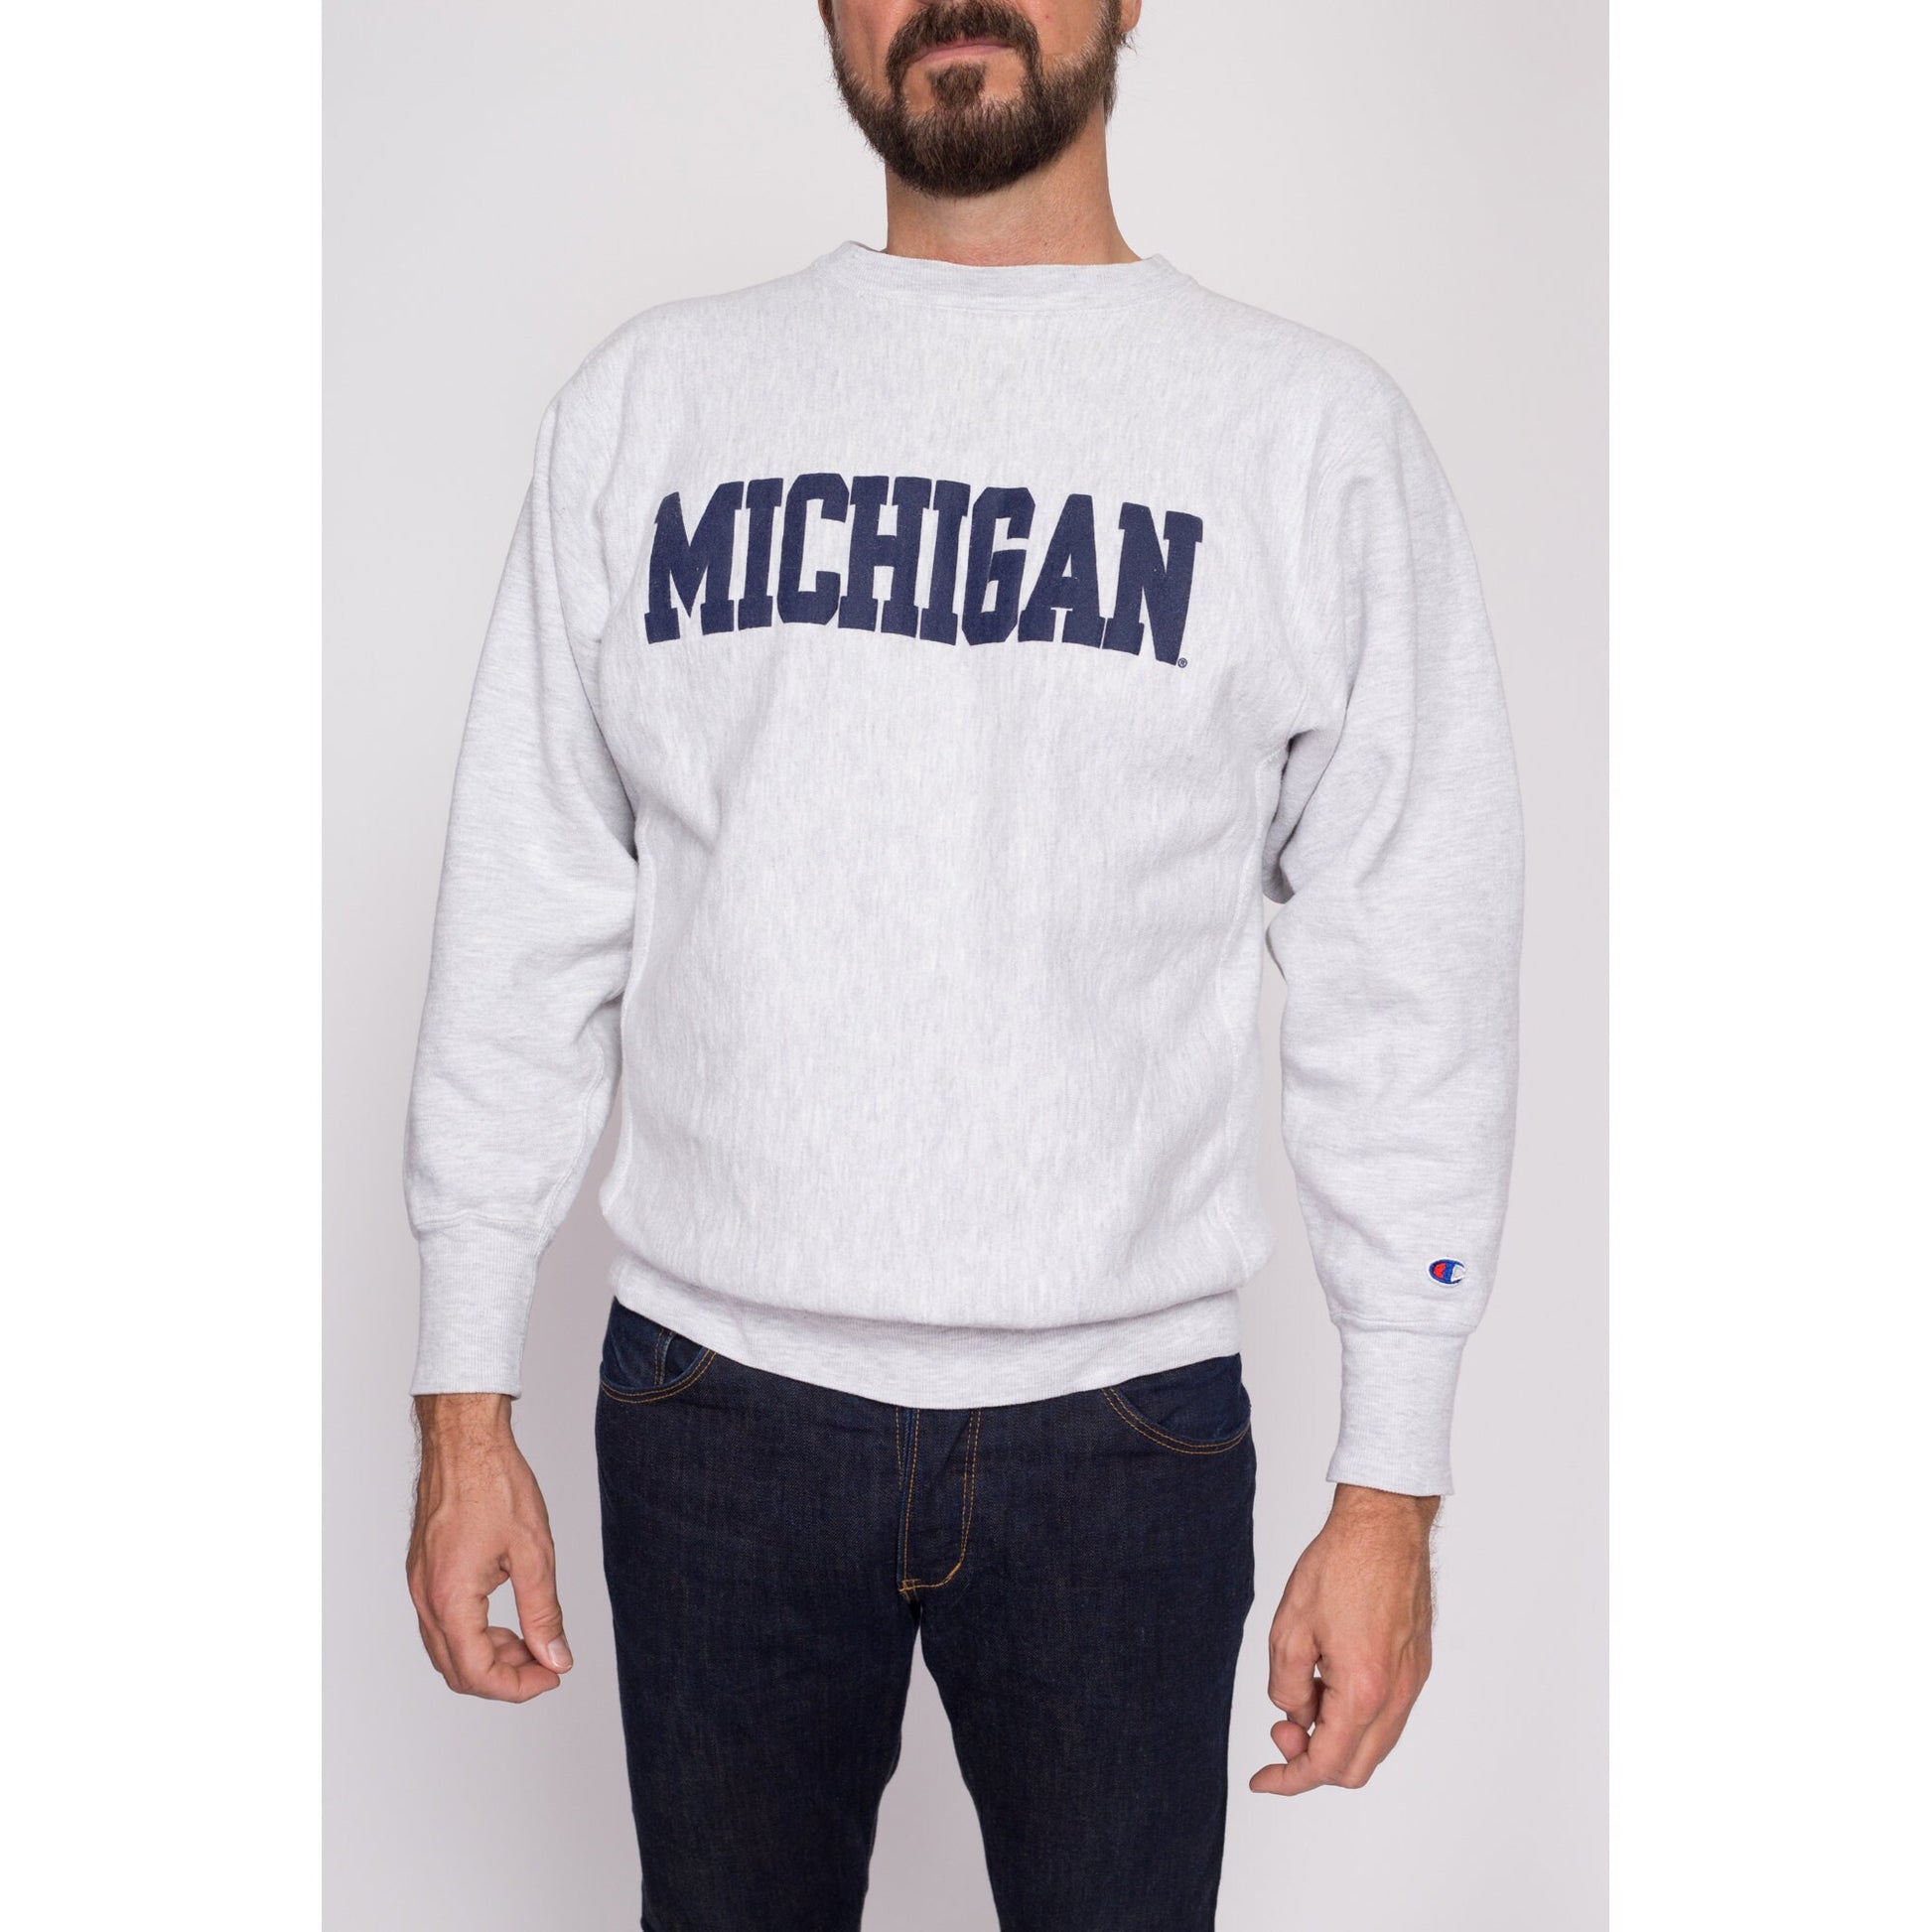 M| 90s University Of Michigan Champion Reverse Weave Sweatshirt - Men's Medium | Vintage Heather Grey Collegiate Crew Neck Pullover